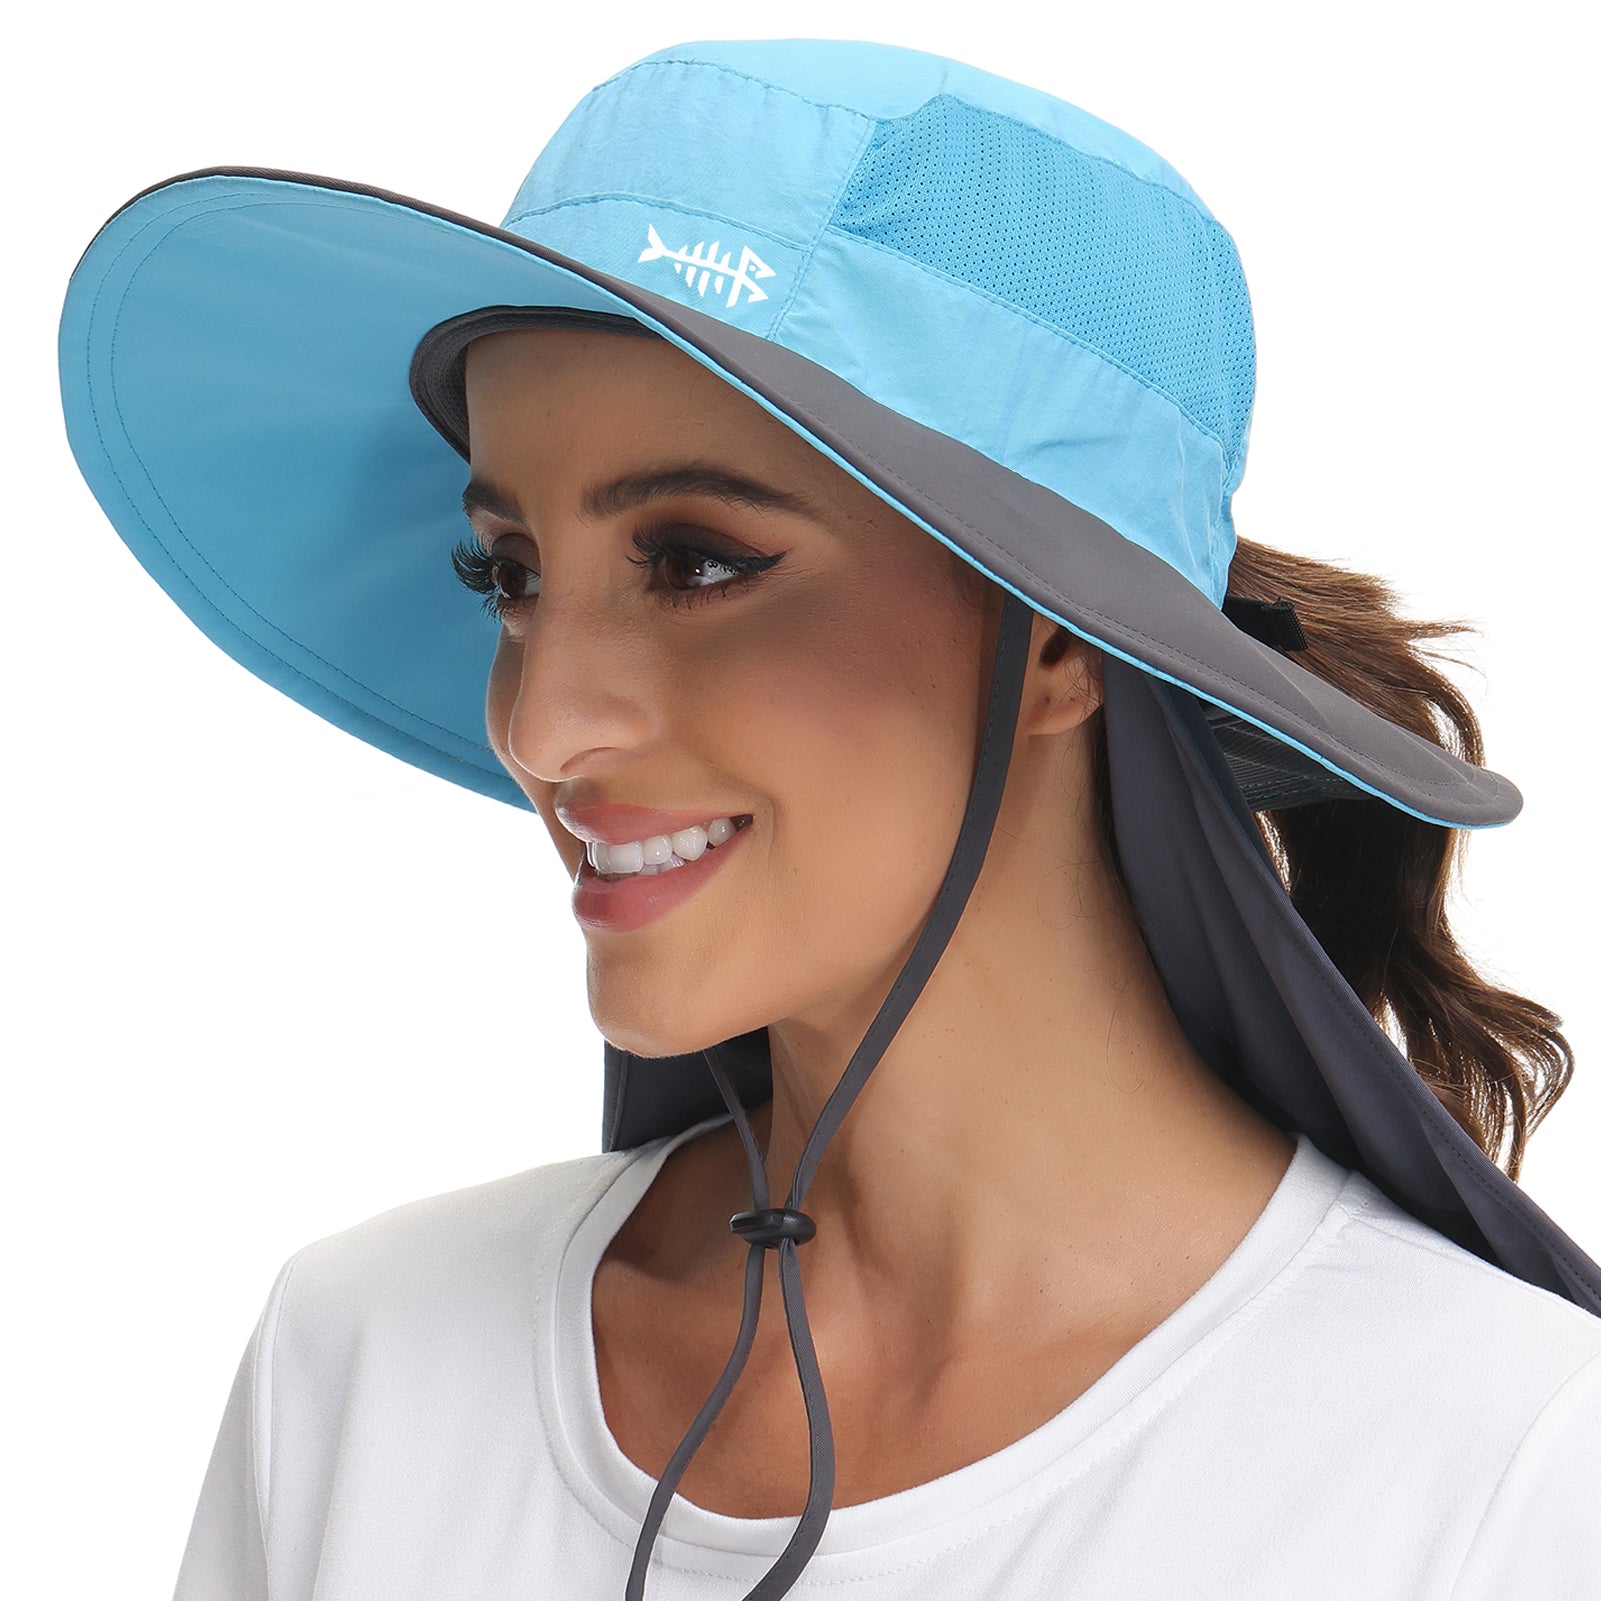 Women's Sun Hat With Ponytail Hole Bassdash Fishing, 49% OFF